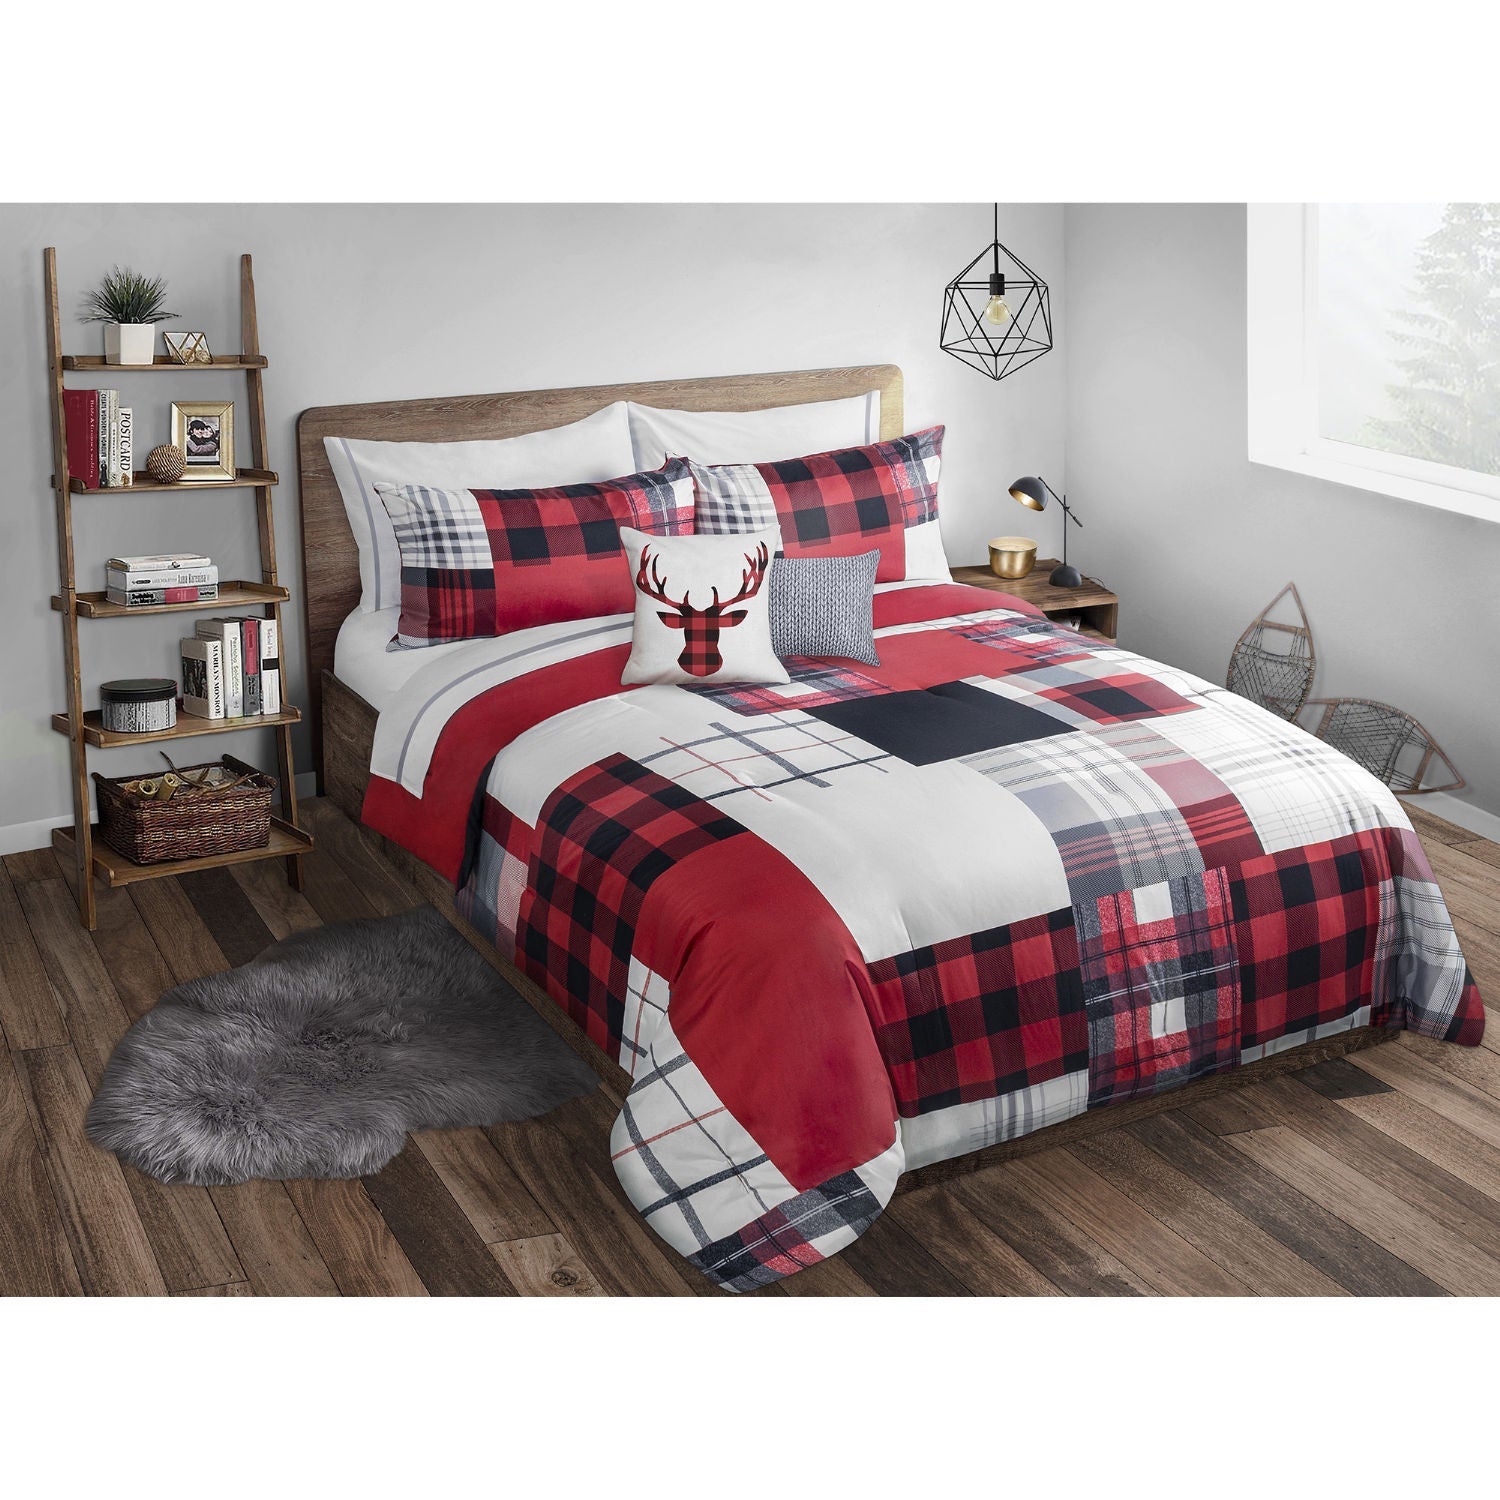 Woven Printed Comforter Bedding Set Twin Rustic Patchwork - DecoElegance - Bedding Comforter Set